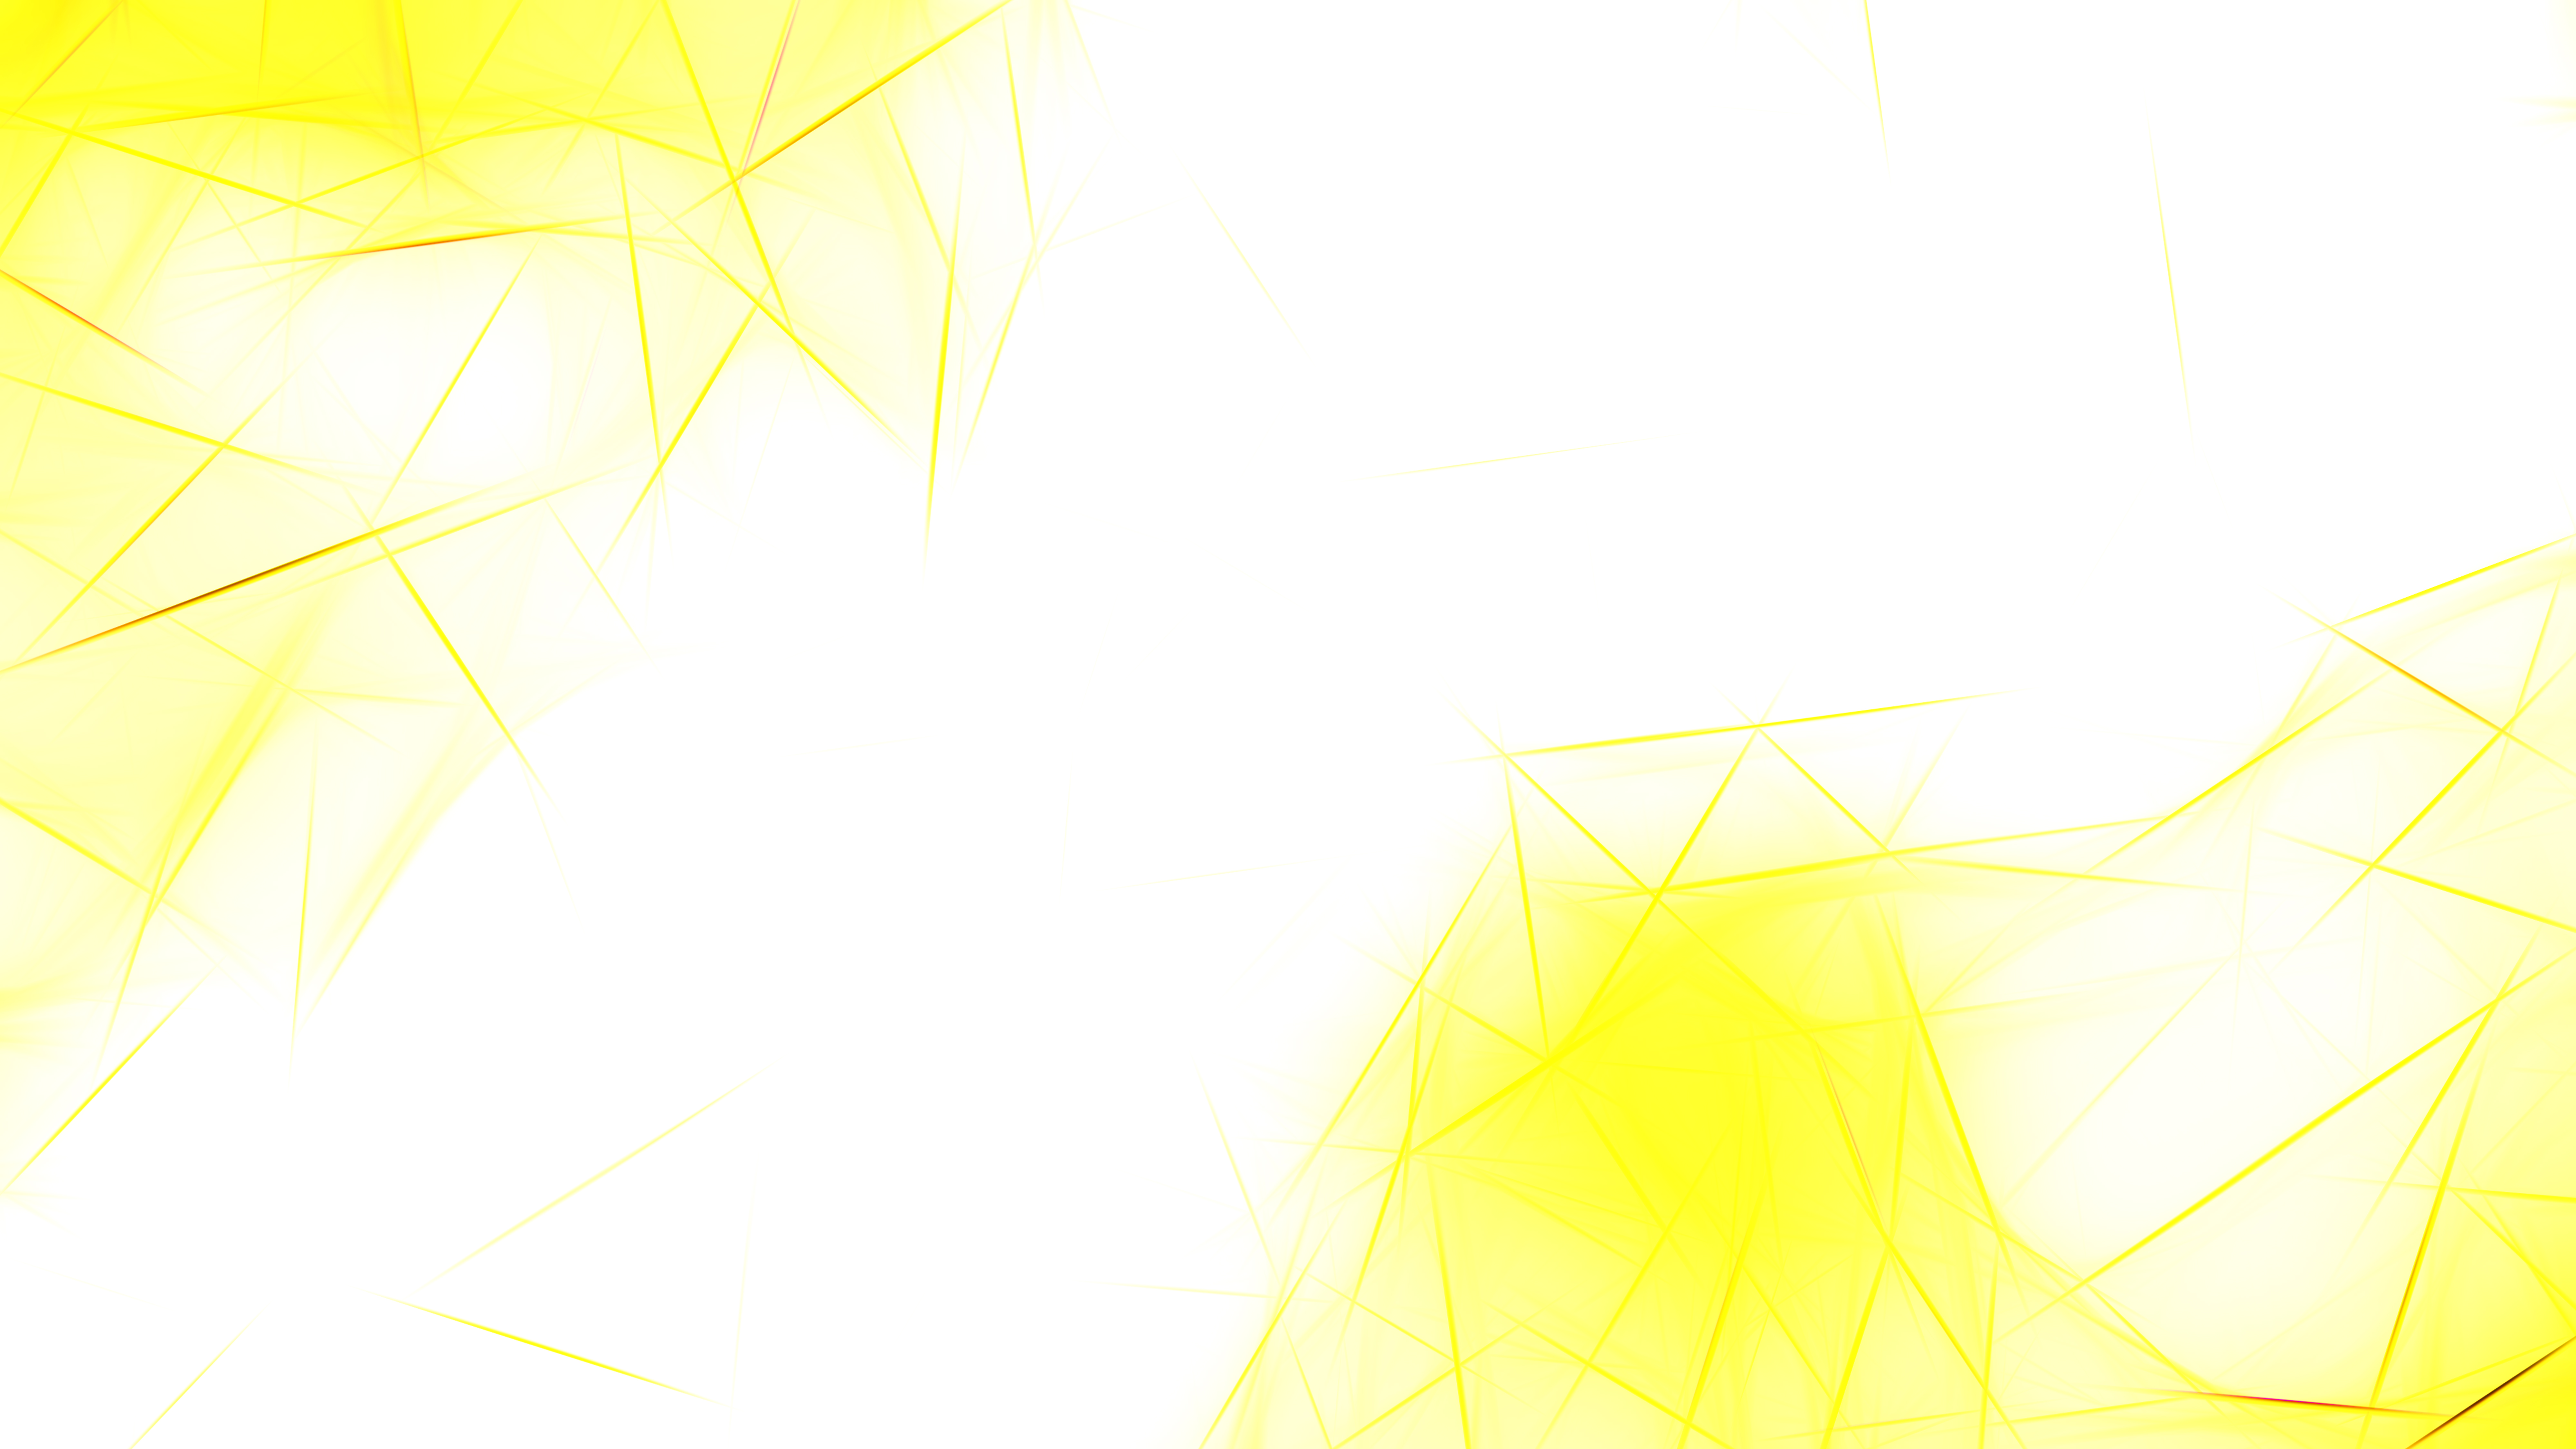 19+] Yellow and White Abstract Wallpapers - WallpaperSafari